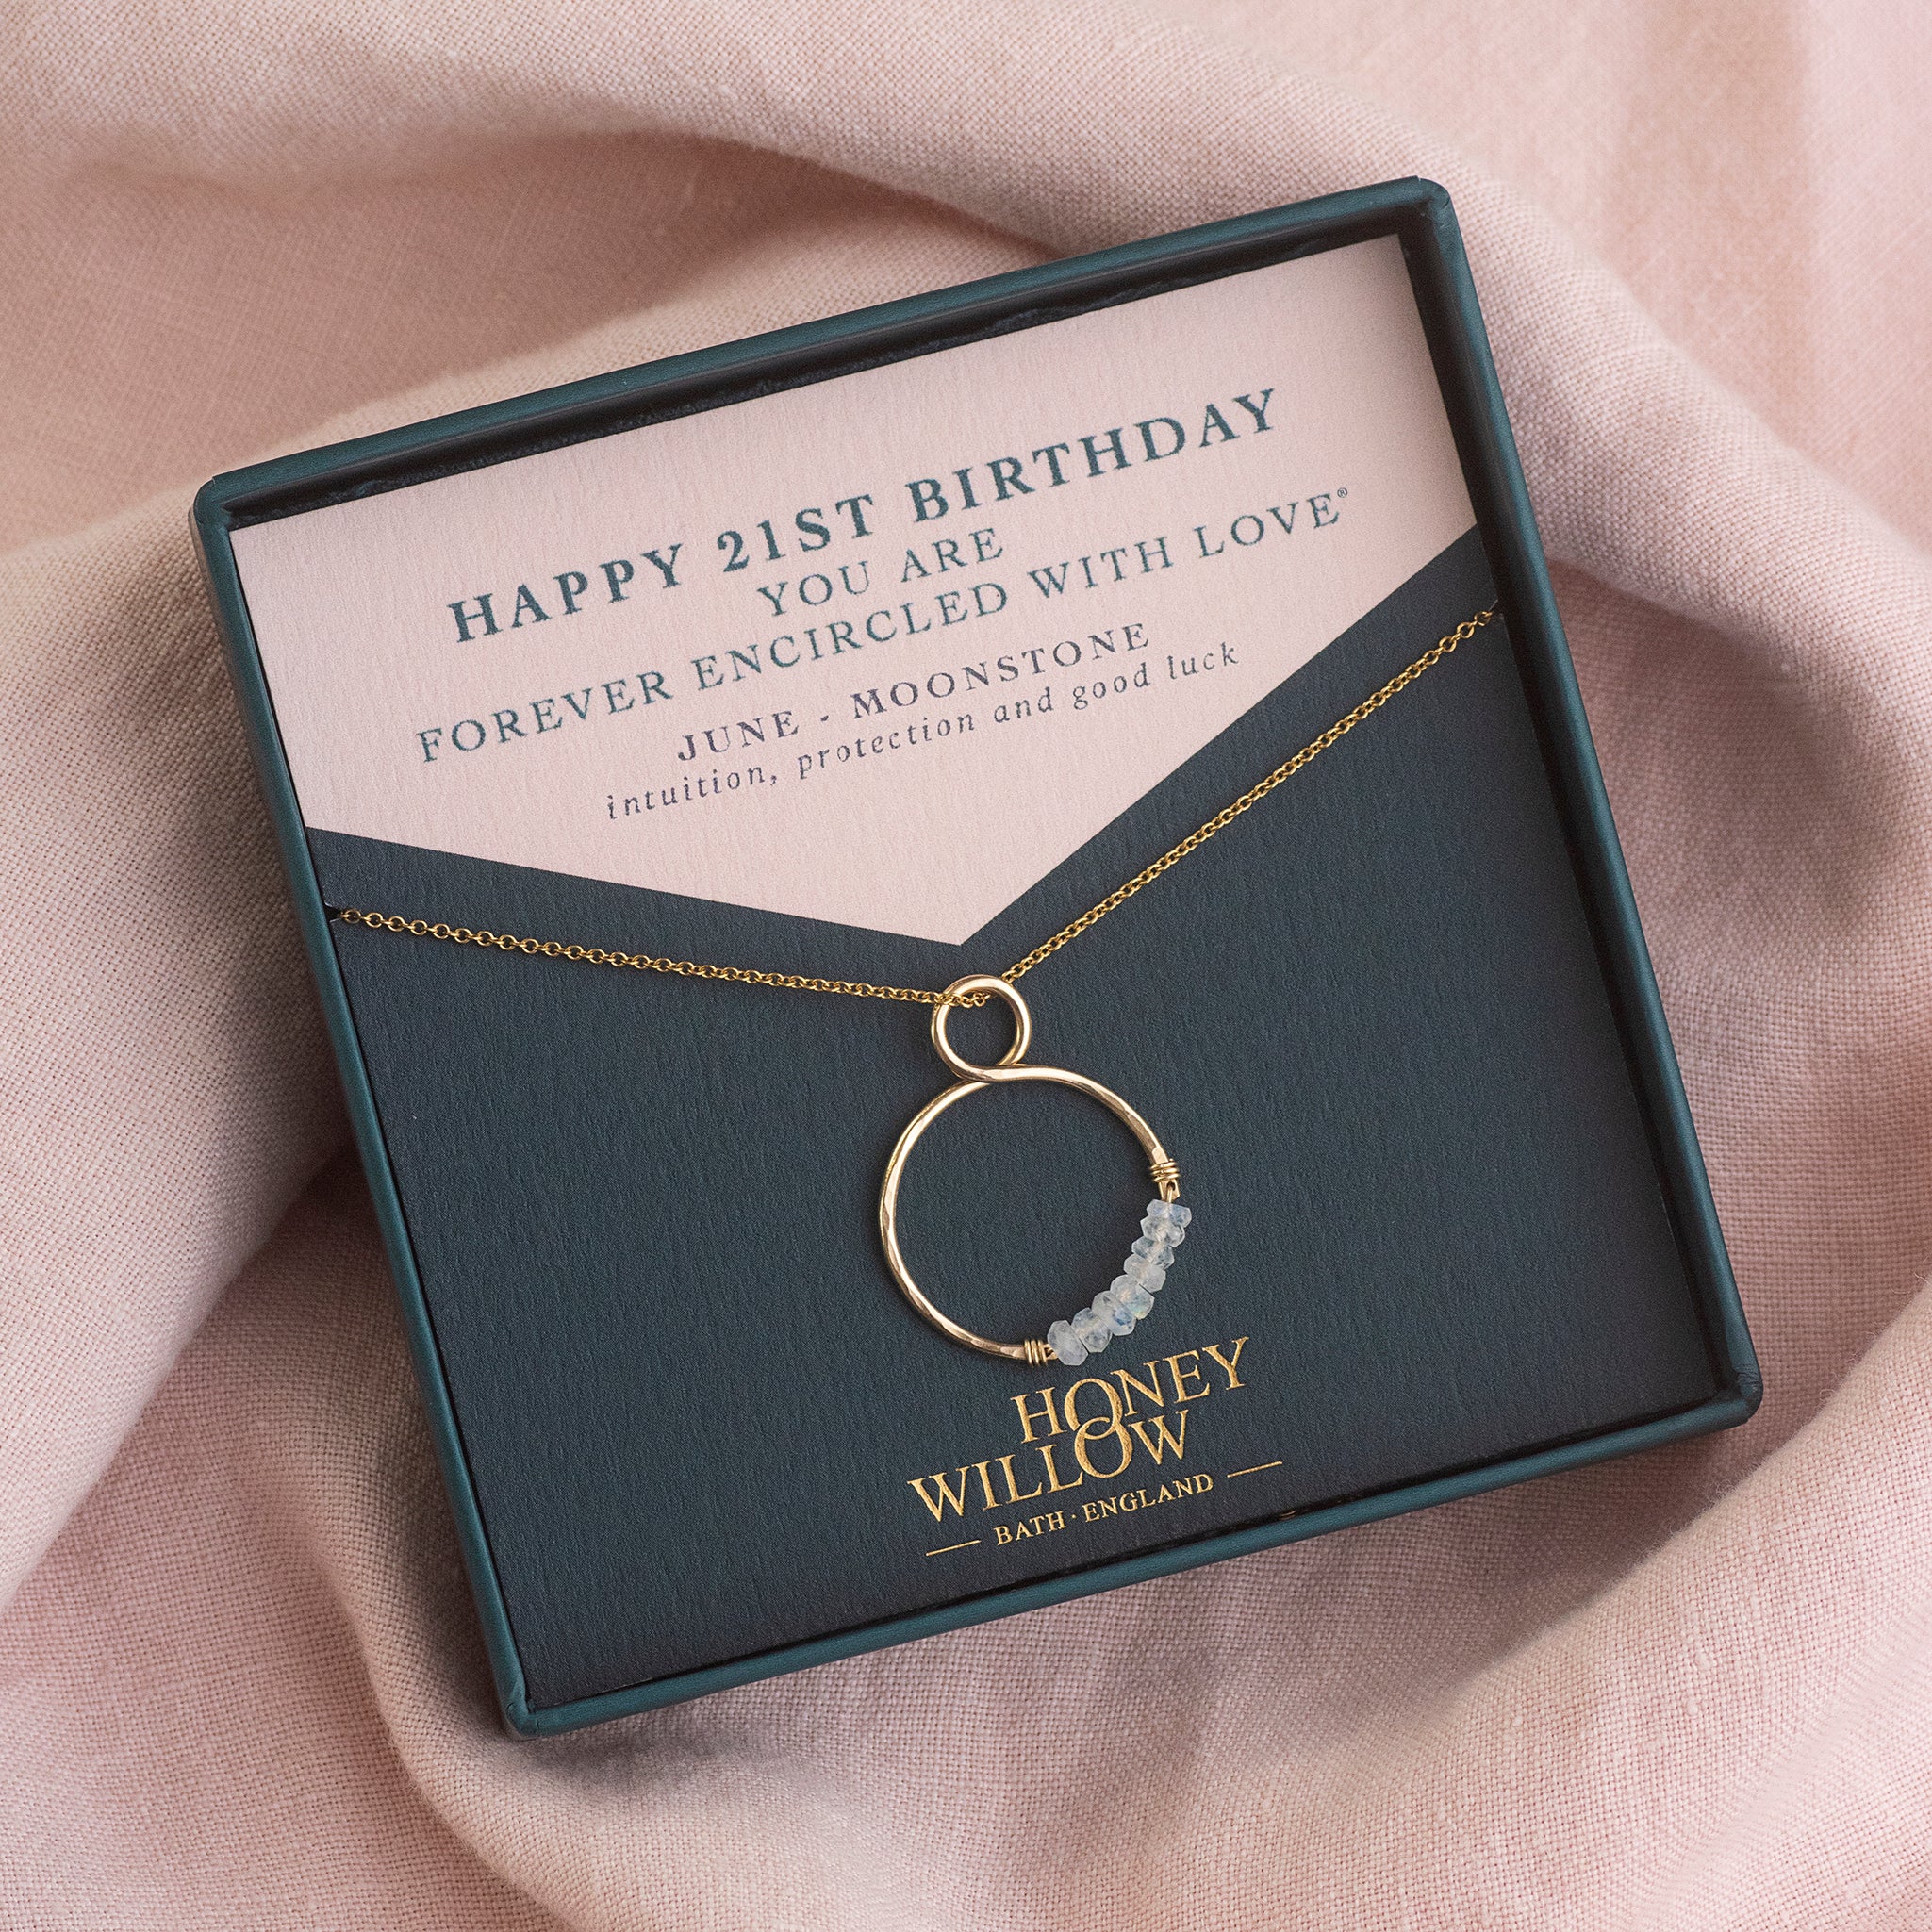 Birthday Gift Boxes | Hallmark